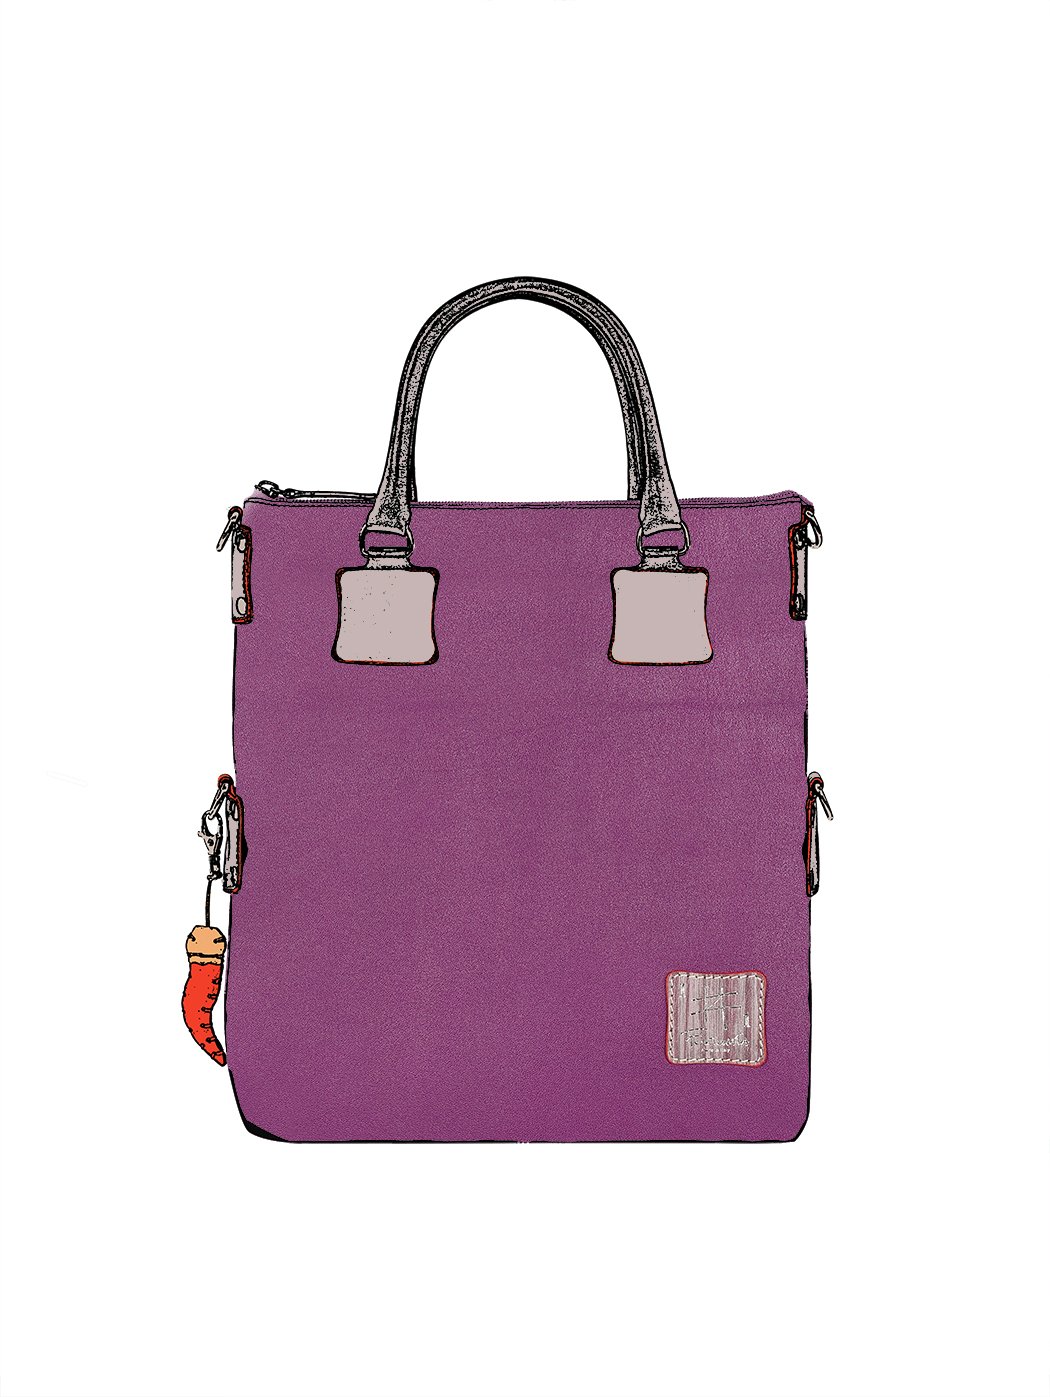 Italian Leather Shopper in purple color